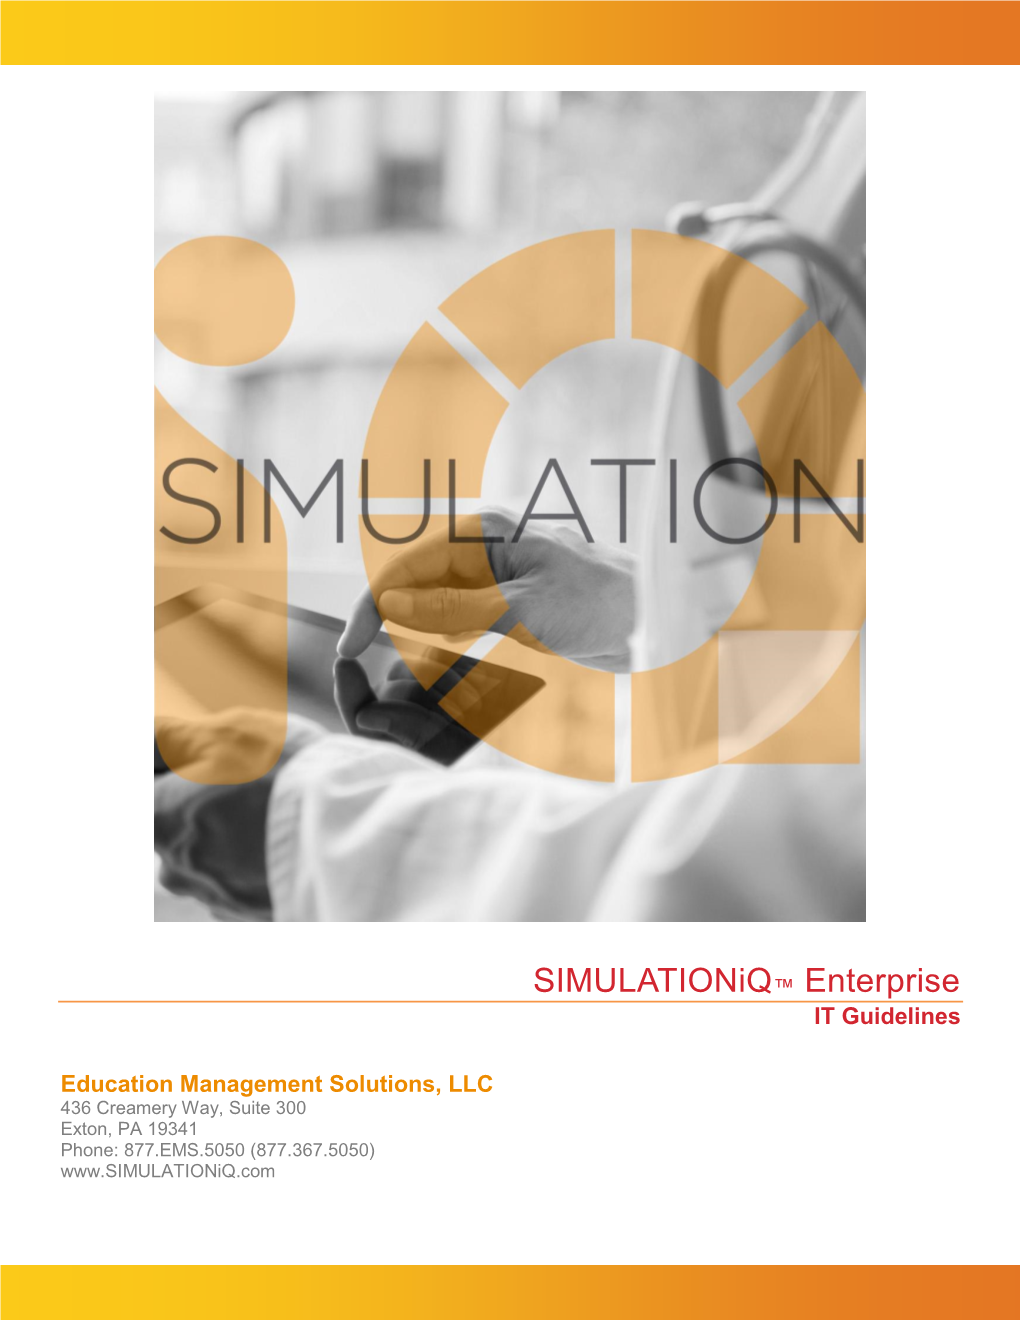 Simulationiq Enterprise IT Guidelines Pluto